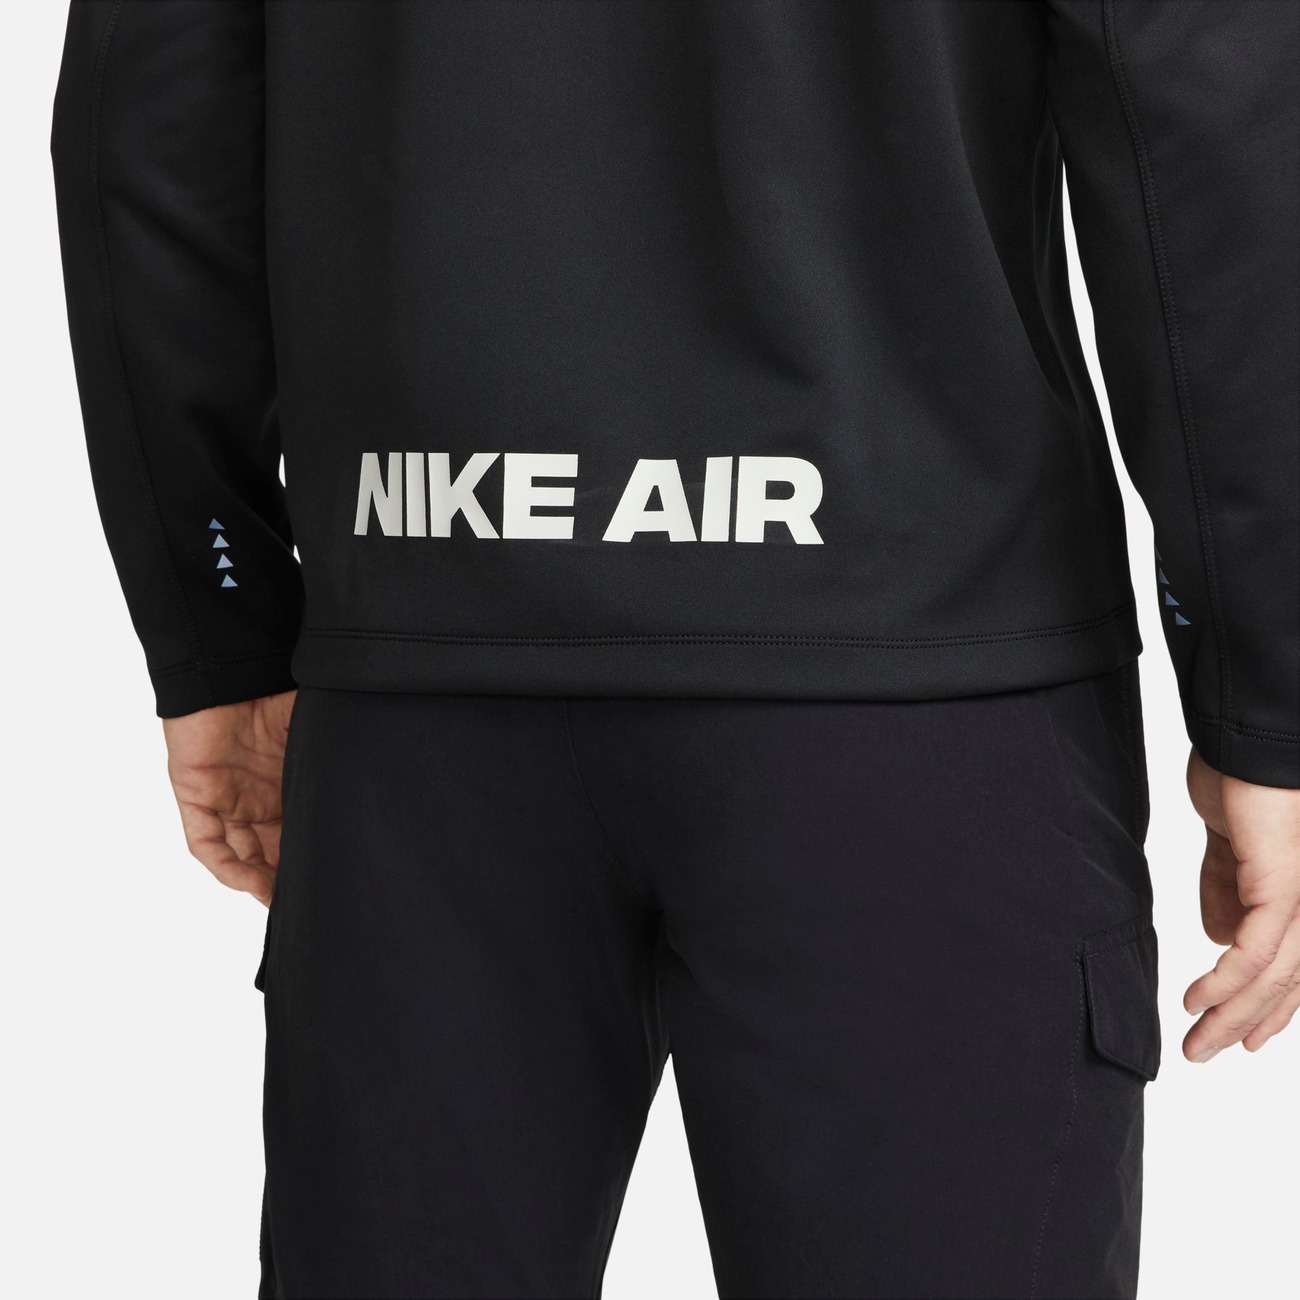 Blusão Nike Air Masculino - Foto 4